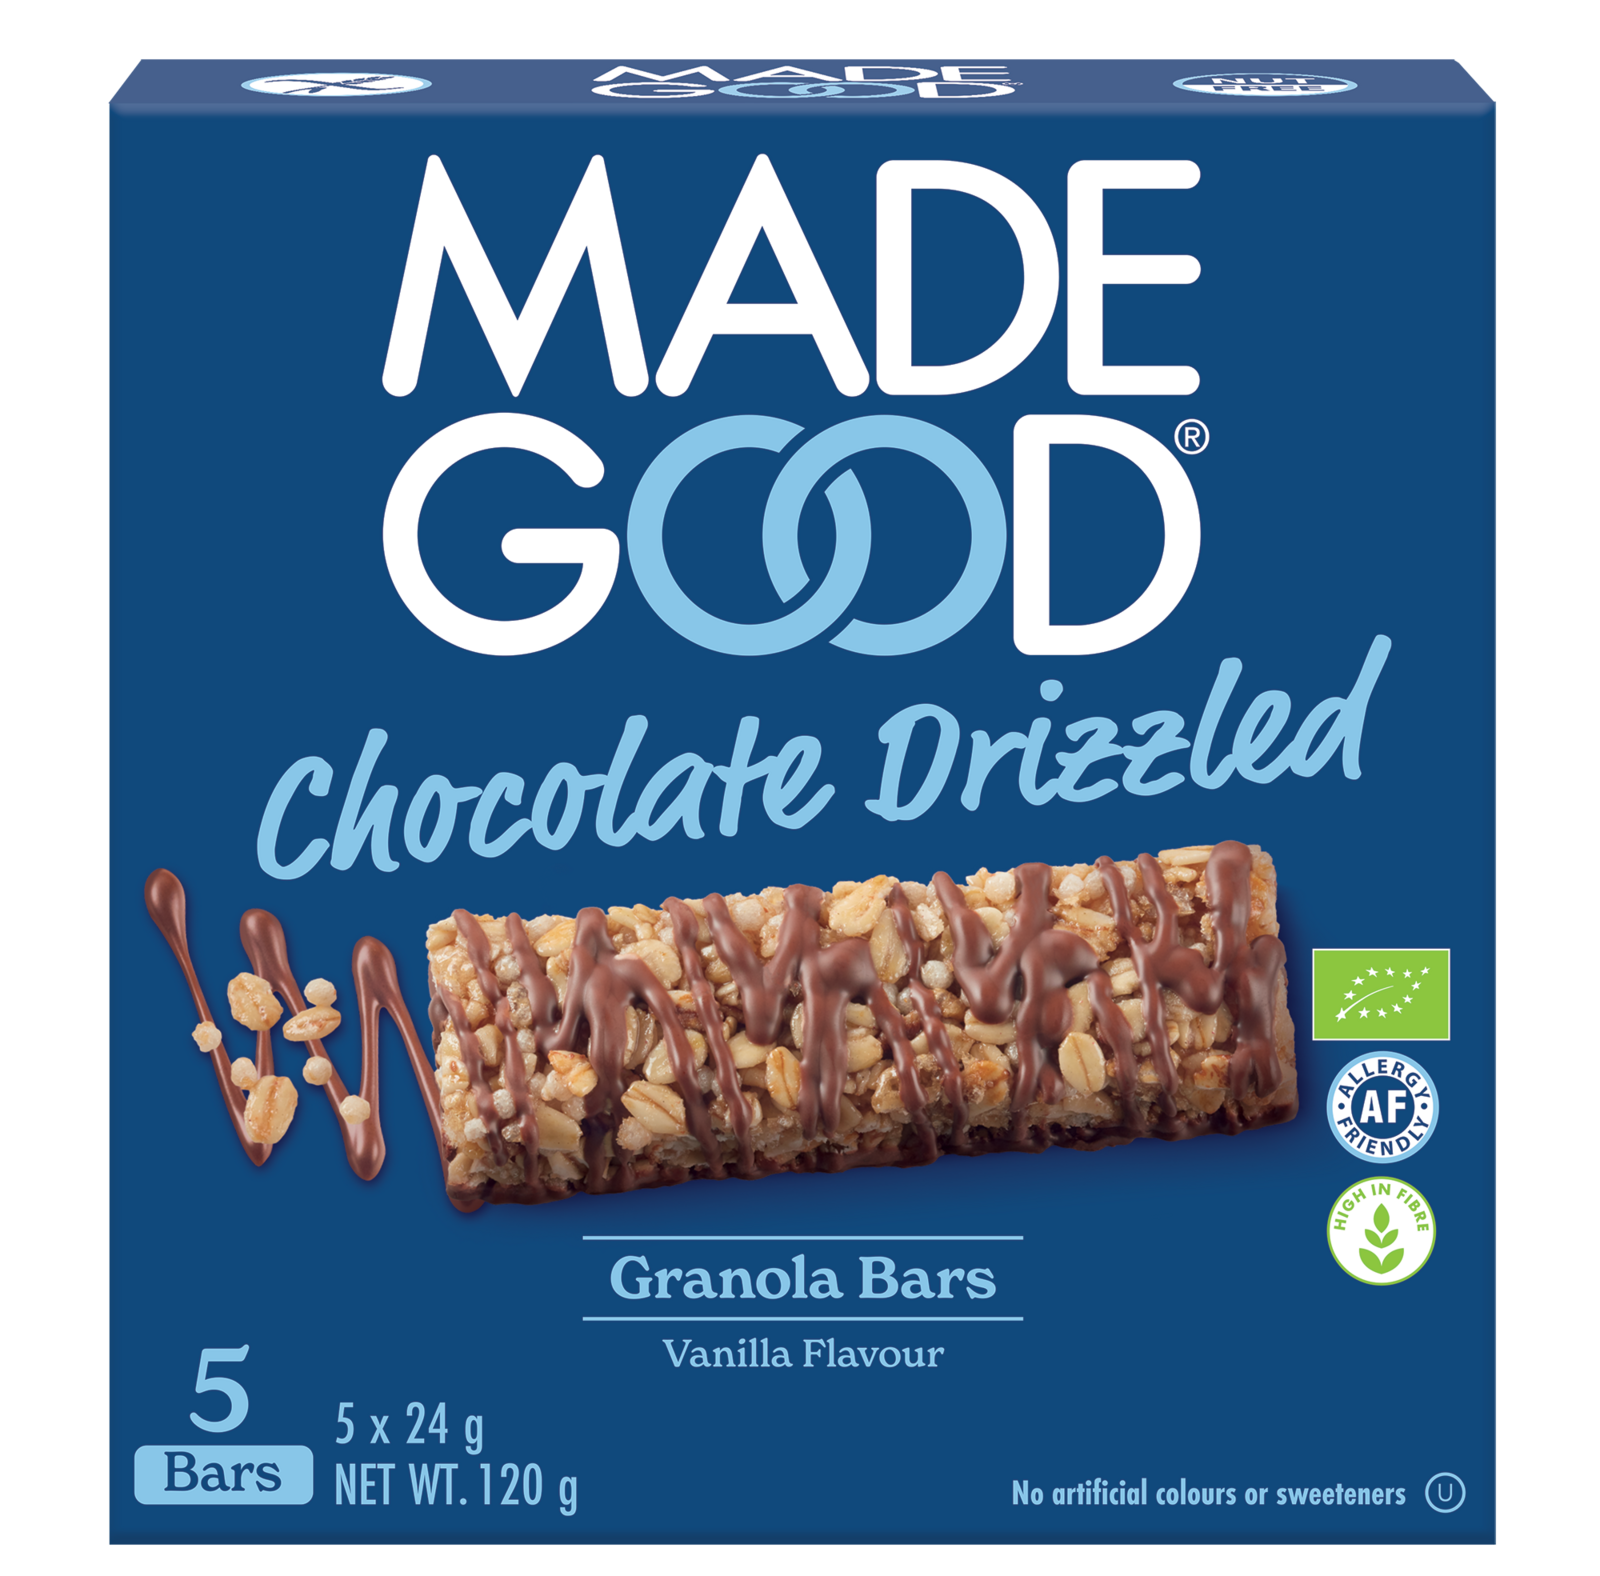 Made Good Chocolate Drizzled Granola Bars - Vanilla Flavor